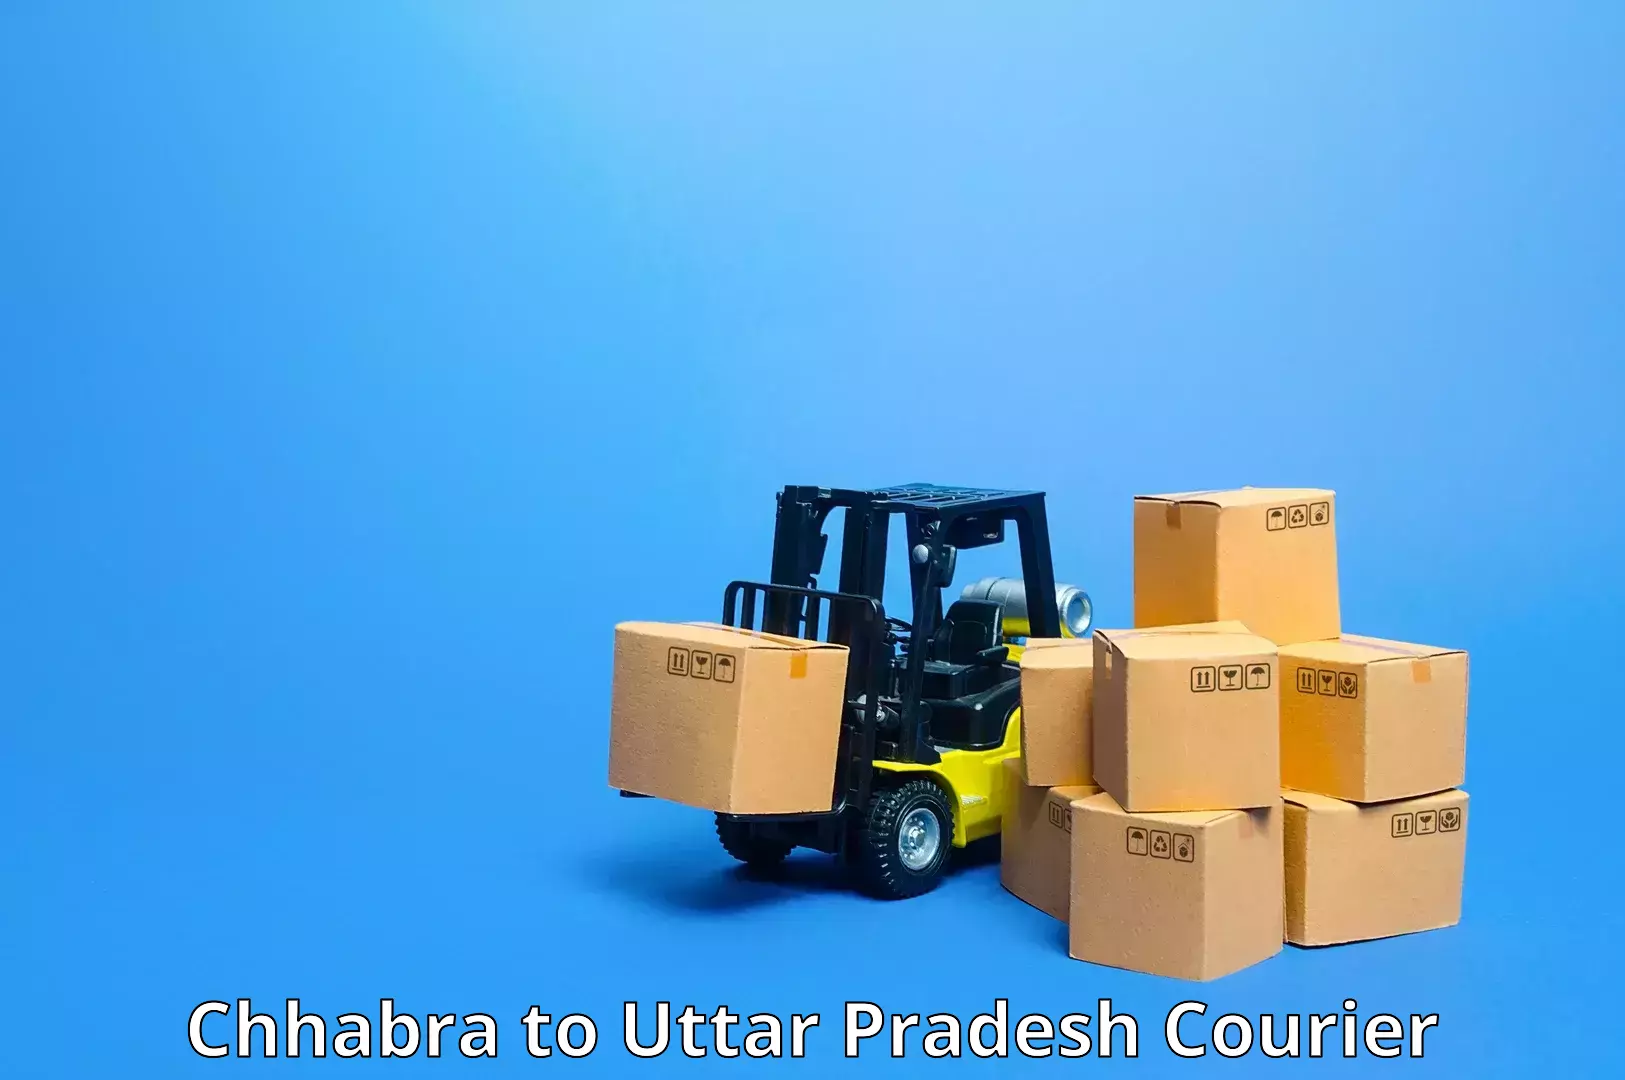 Efficient order fulfillment Chhabra to Uttar Pradesh